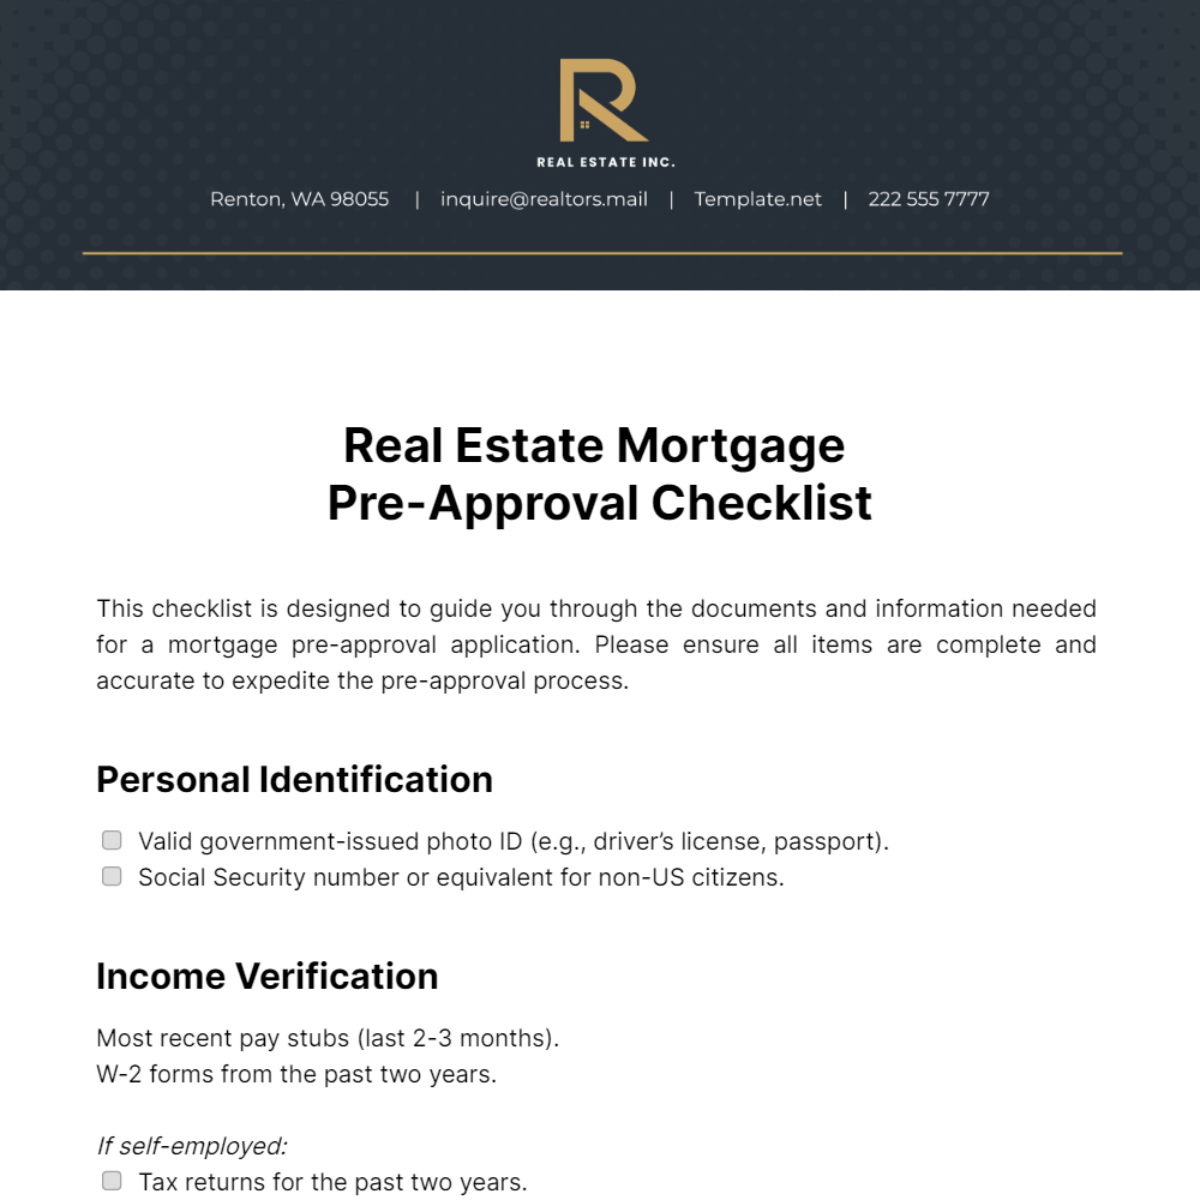 Real Estate Mortgage Pre-Approval Checklist Template